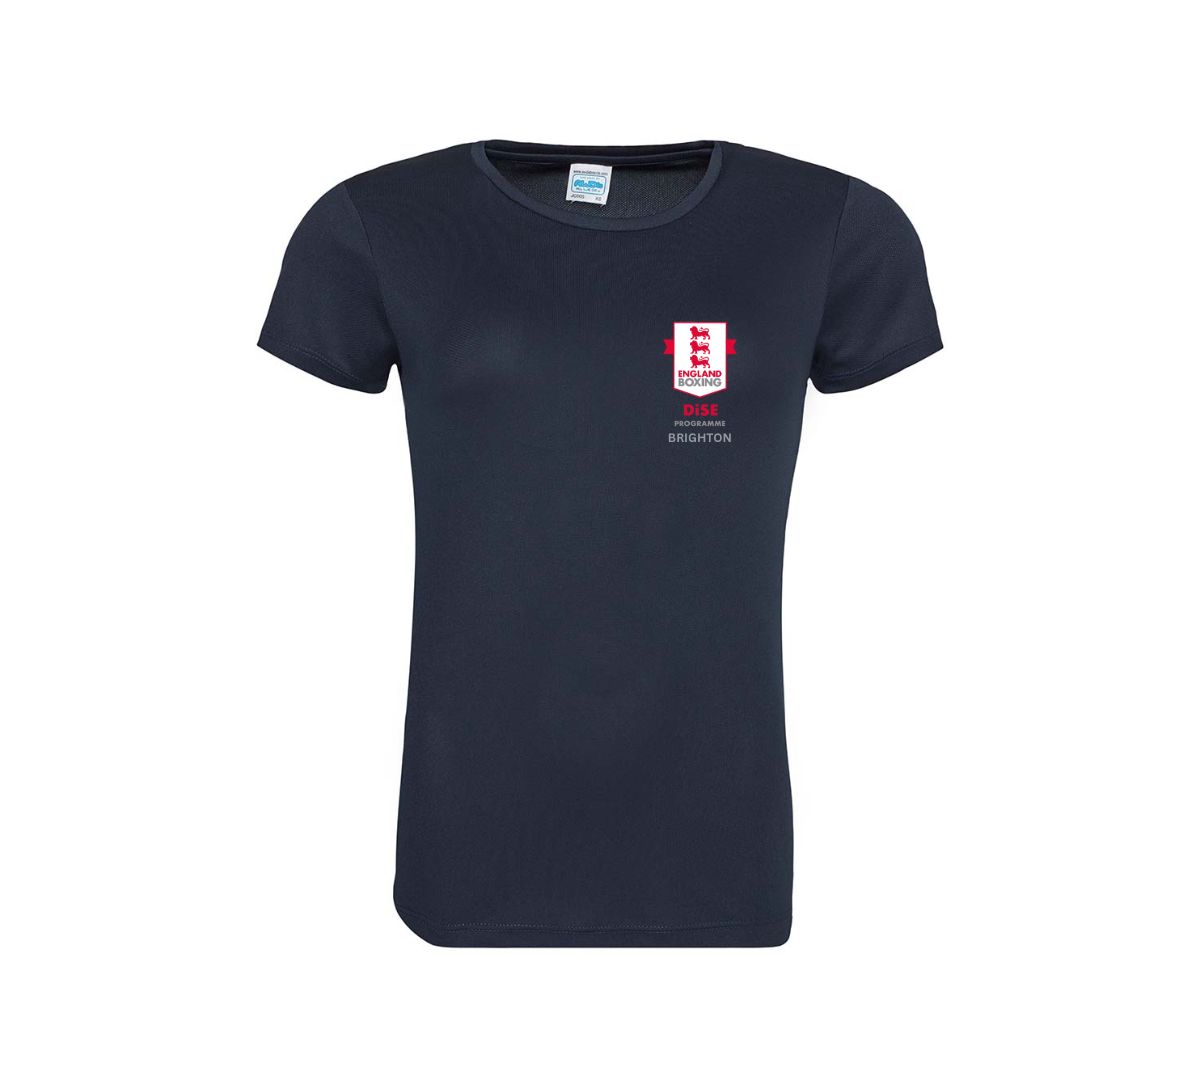 DiSE Programme (Brighton) Ladies Cool T-Shirt